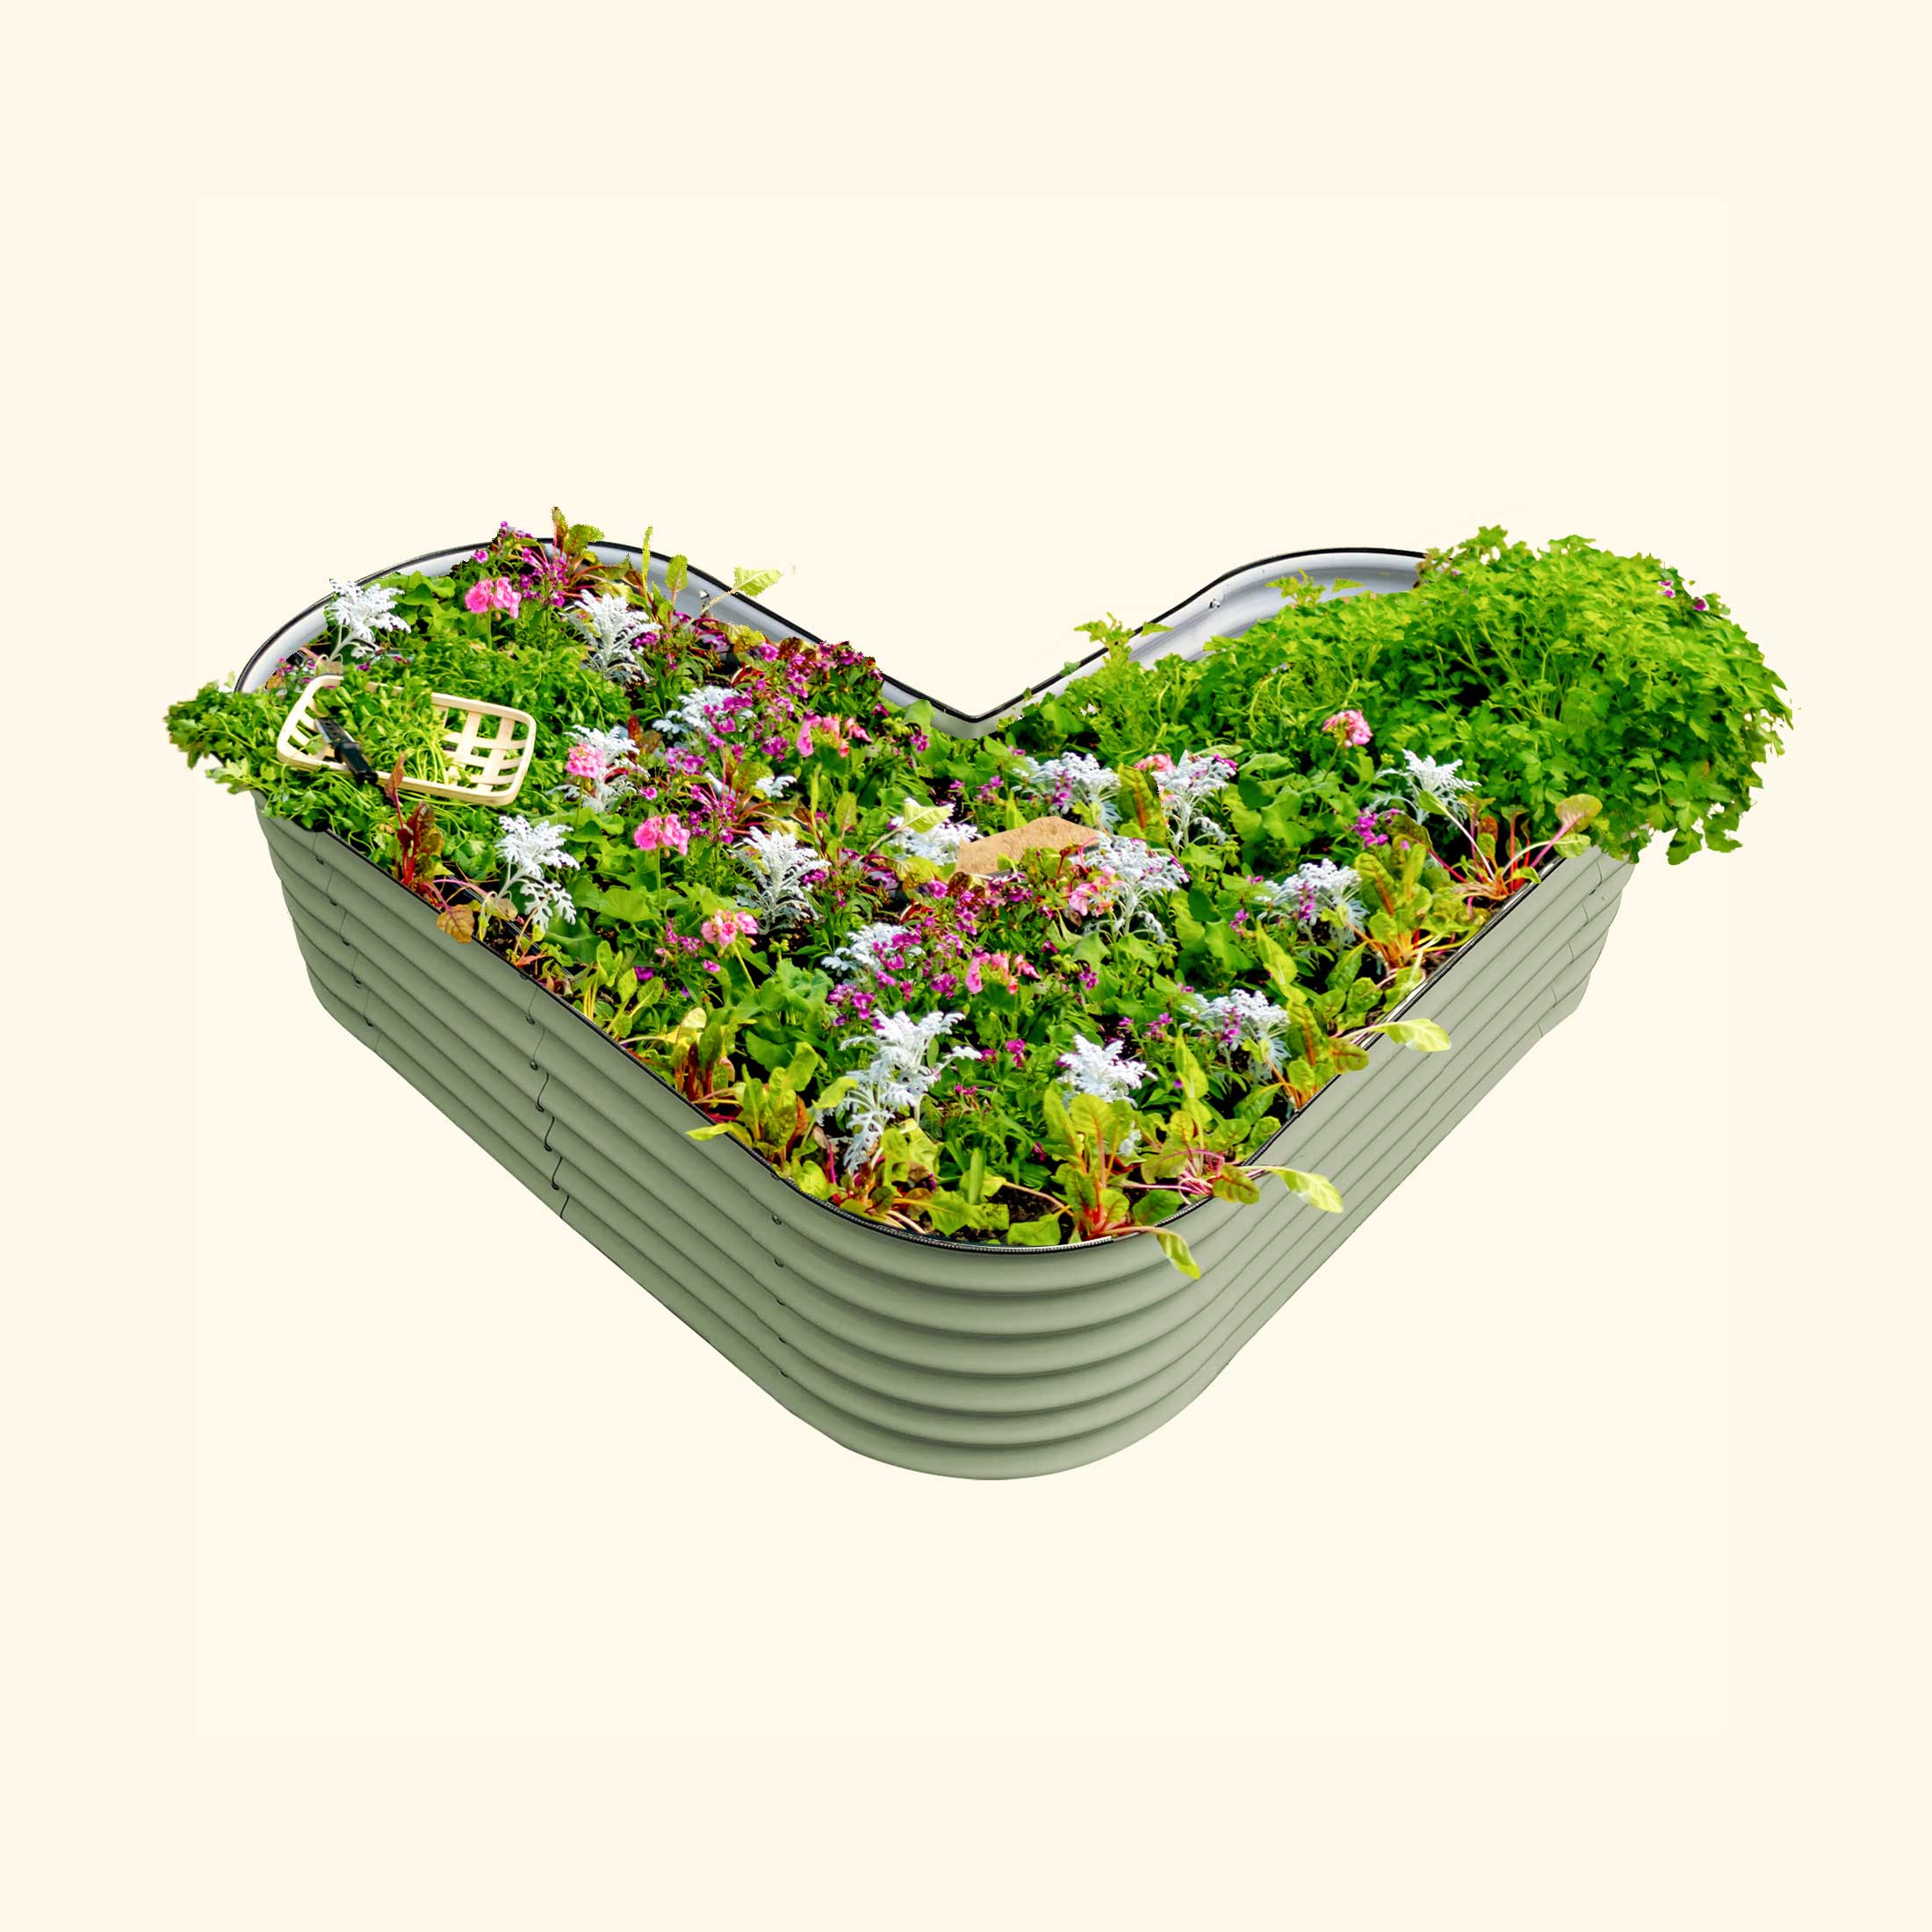 17 tall L-shaped metal garden container - Standard Size | Olive Green | Vego Garden raised garden bed